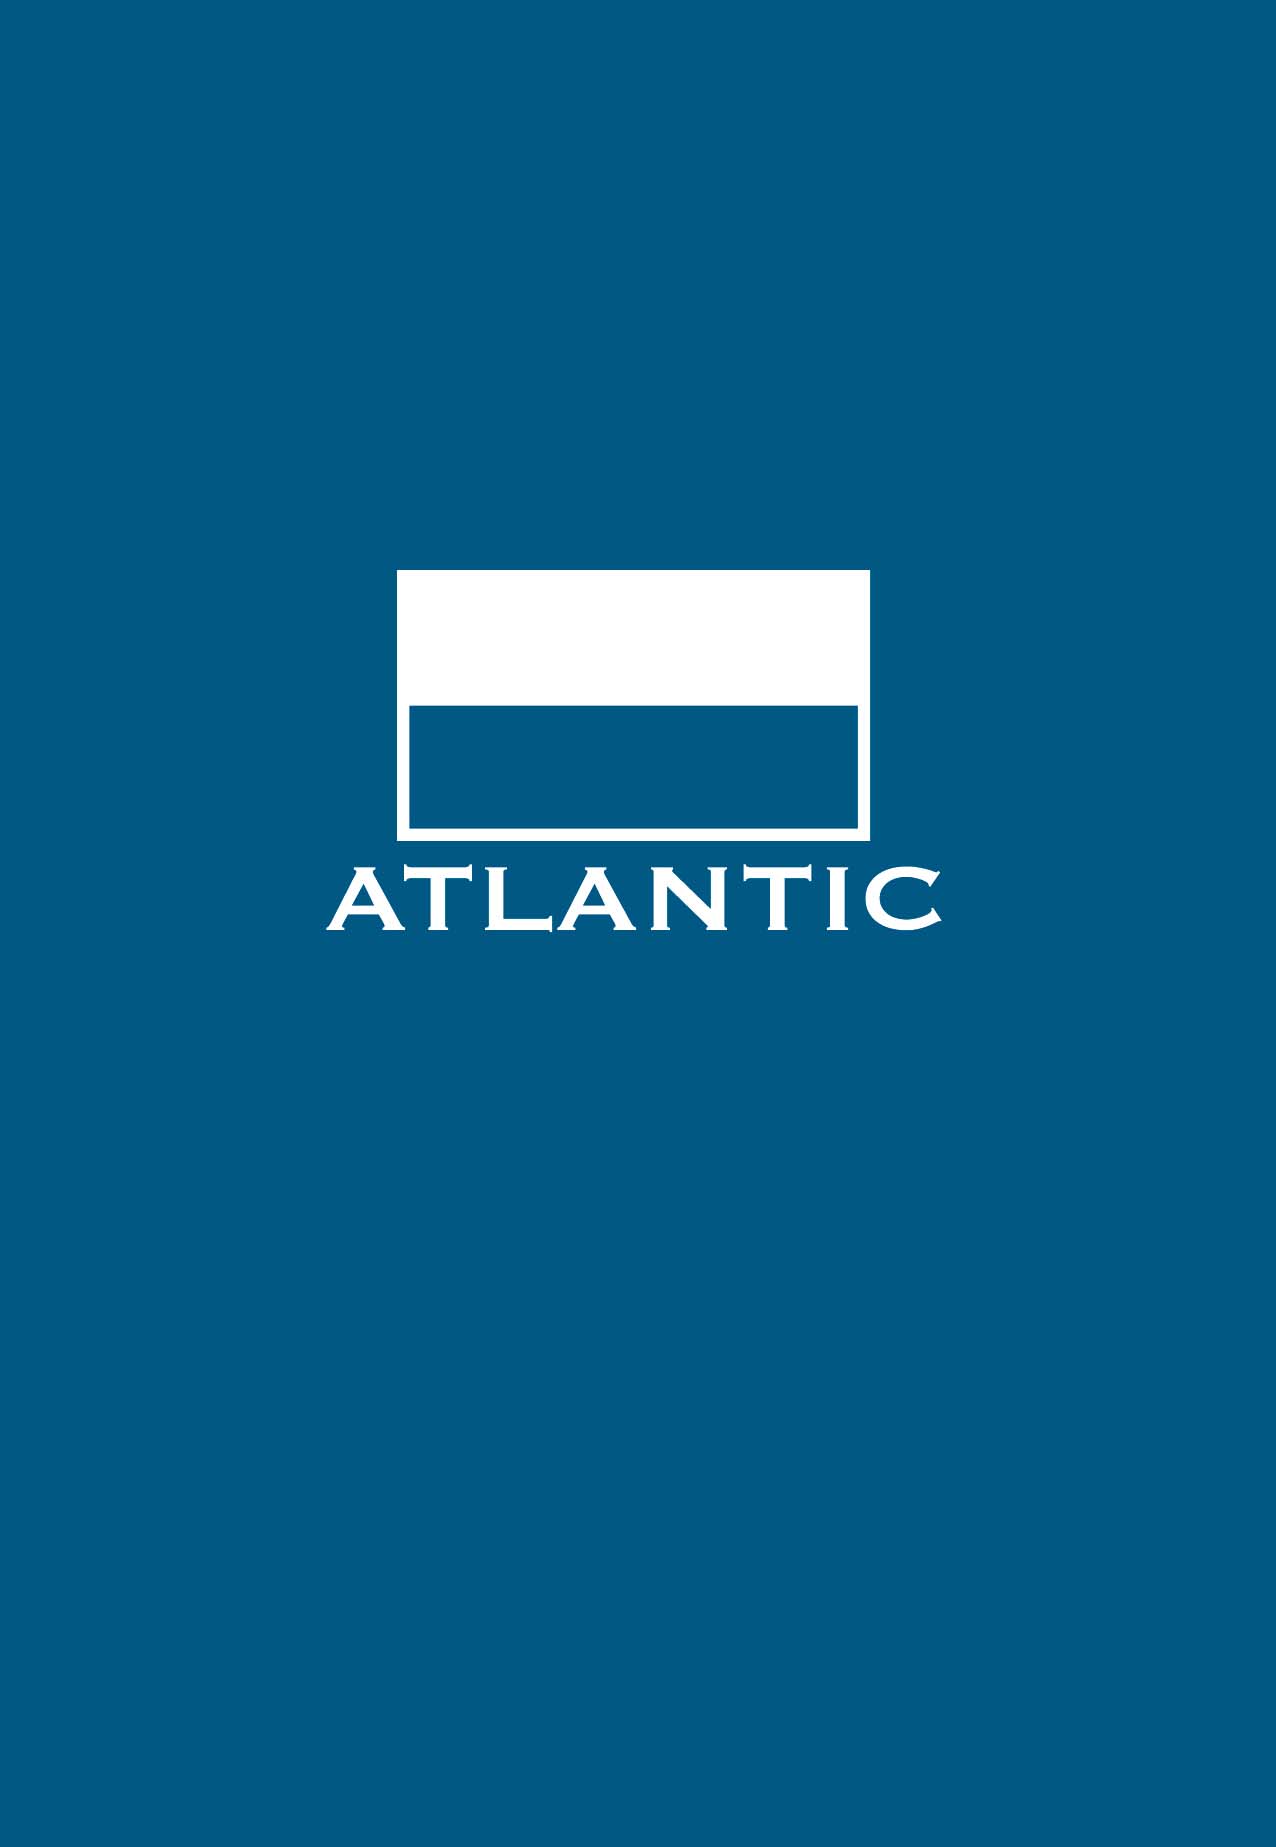 Atlantic Golf Club – (Full color edition)